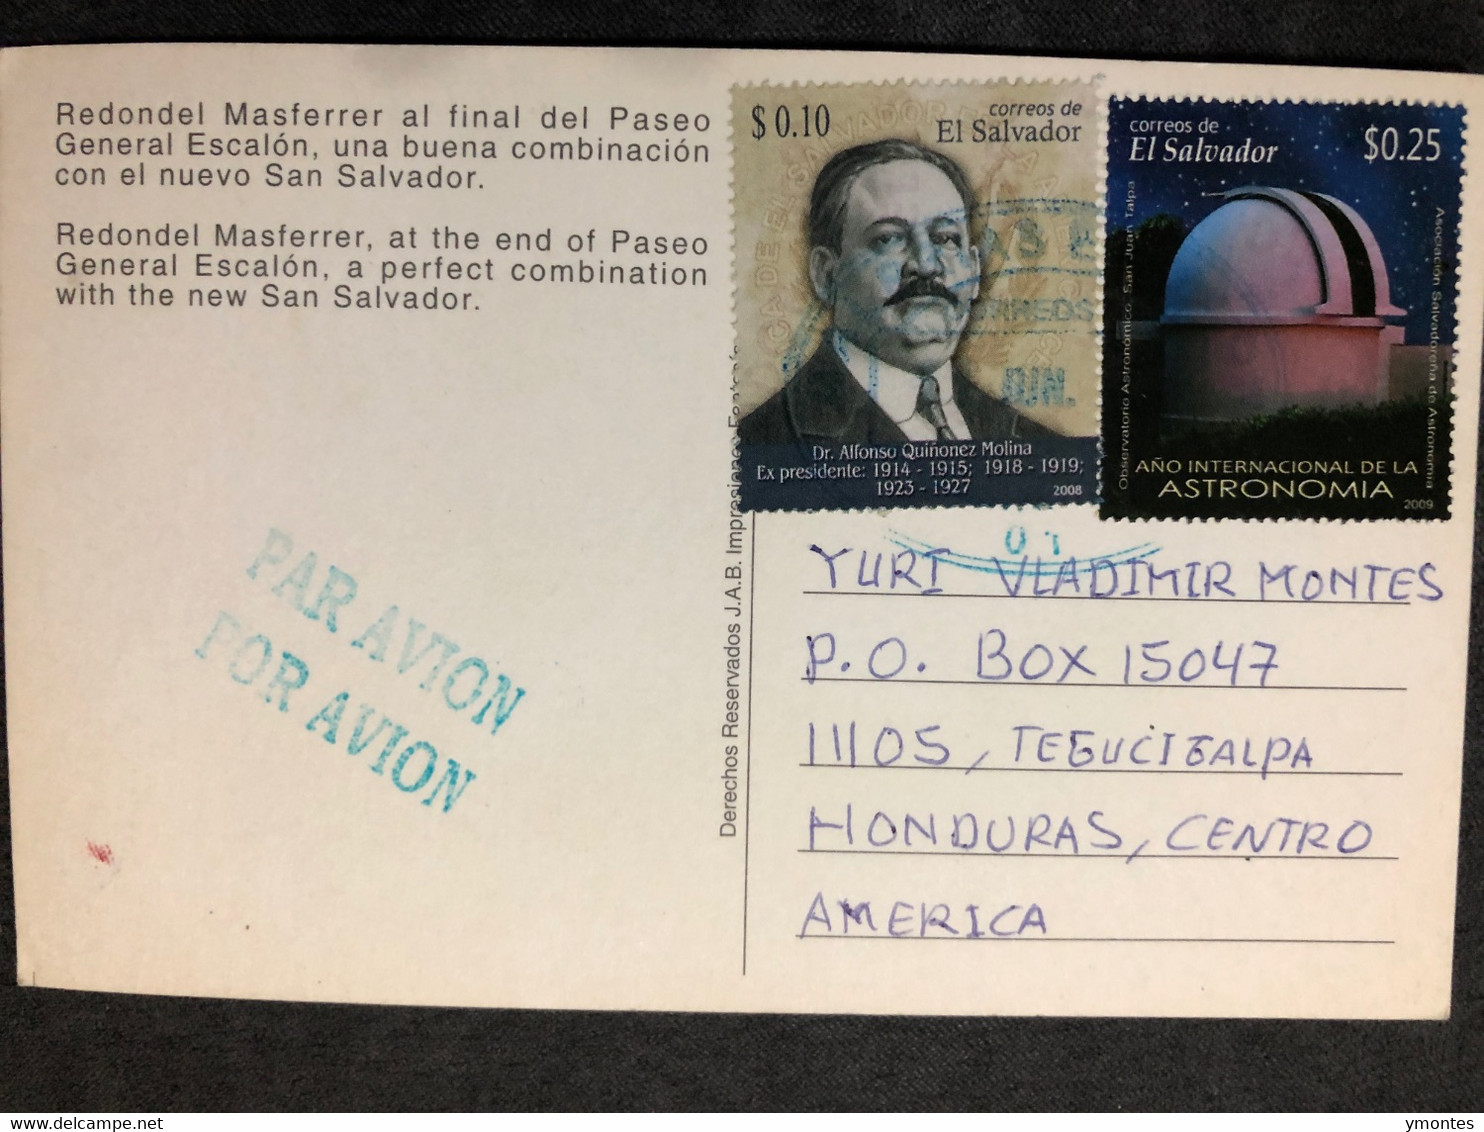 Postcard Redondel Masferrer 2013 ( Astronomy Stamps ) - El Salvador